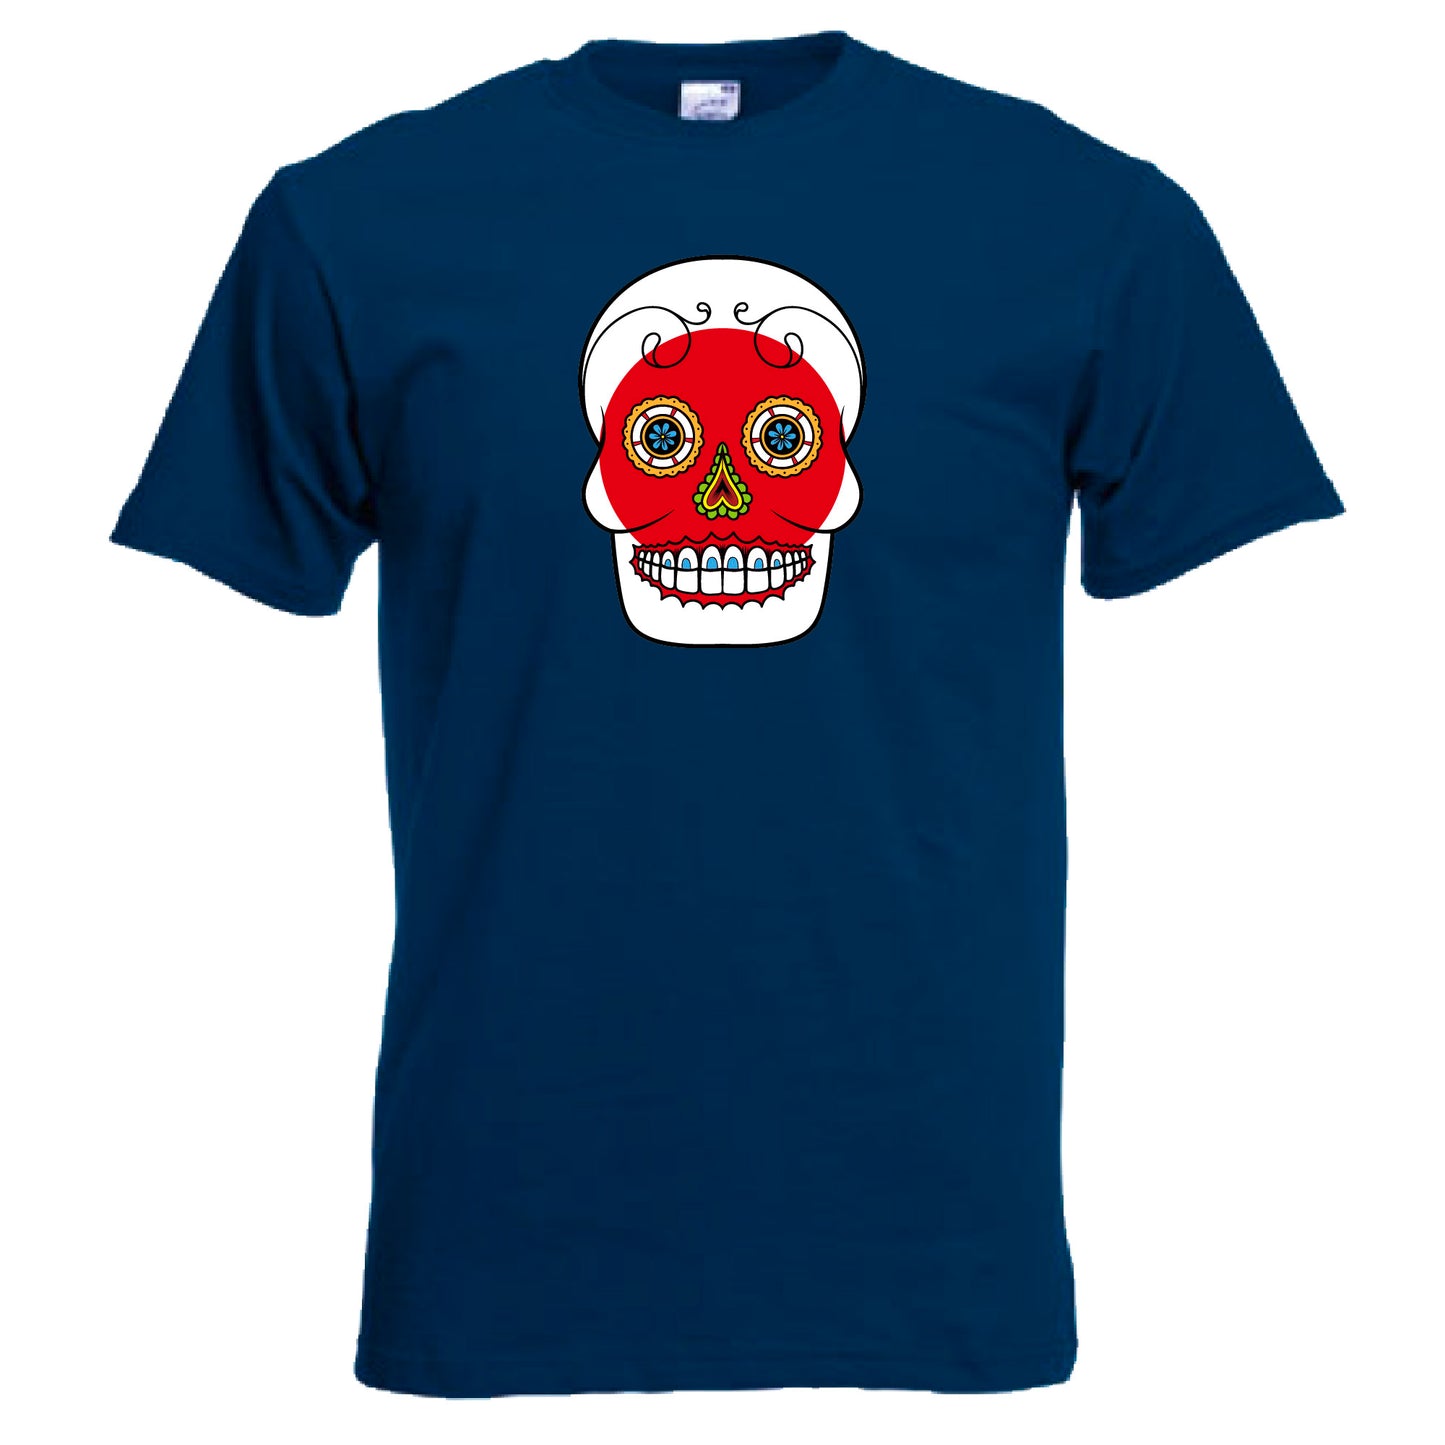 INDIGOS UG - T-Shirt Herren - Japan - Skull - Fussball